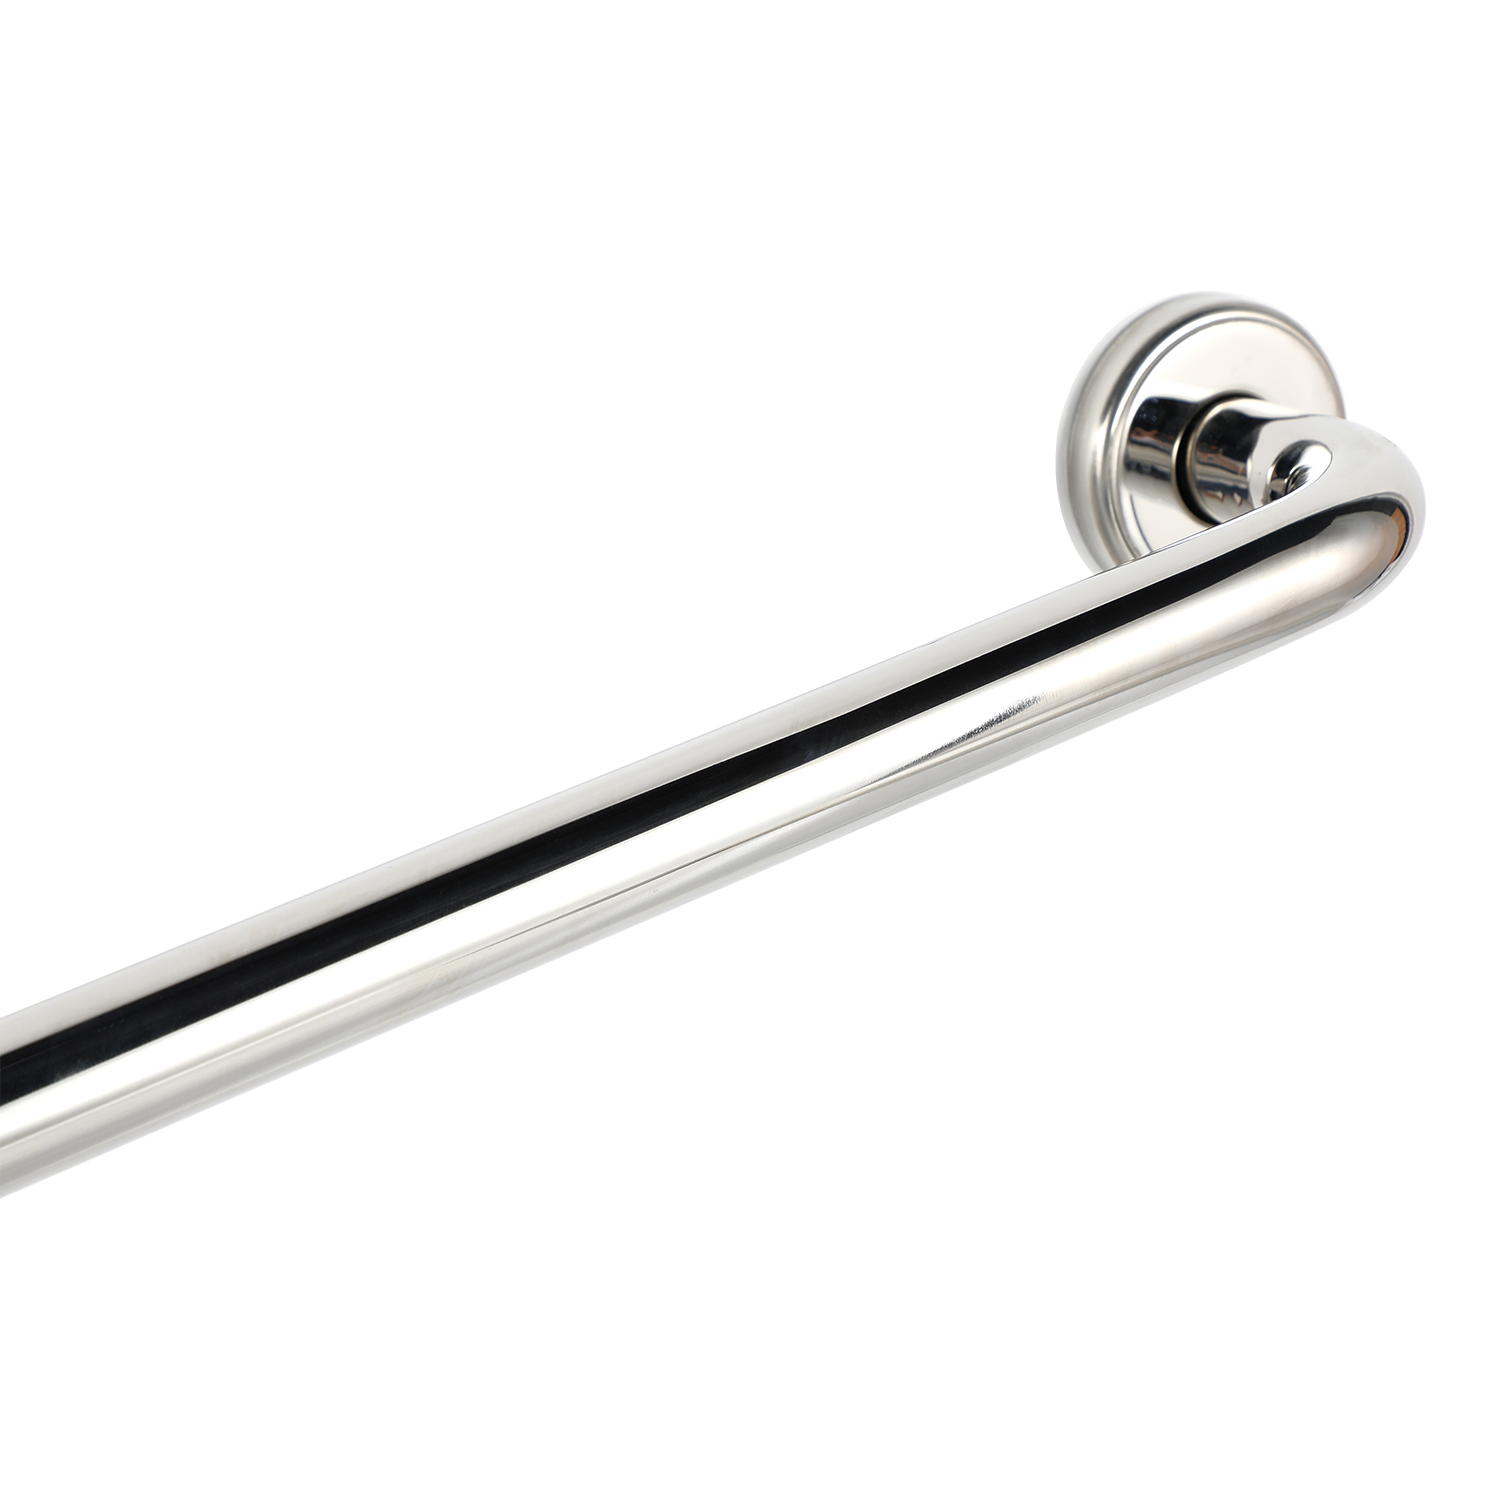 Stainless Steel Bathroom Handrail